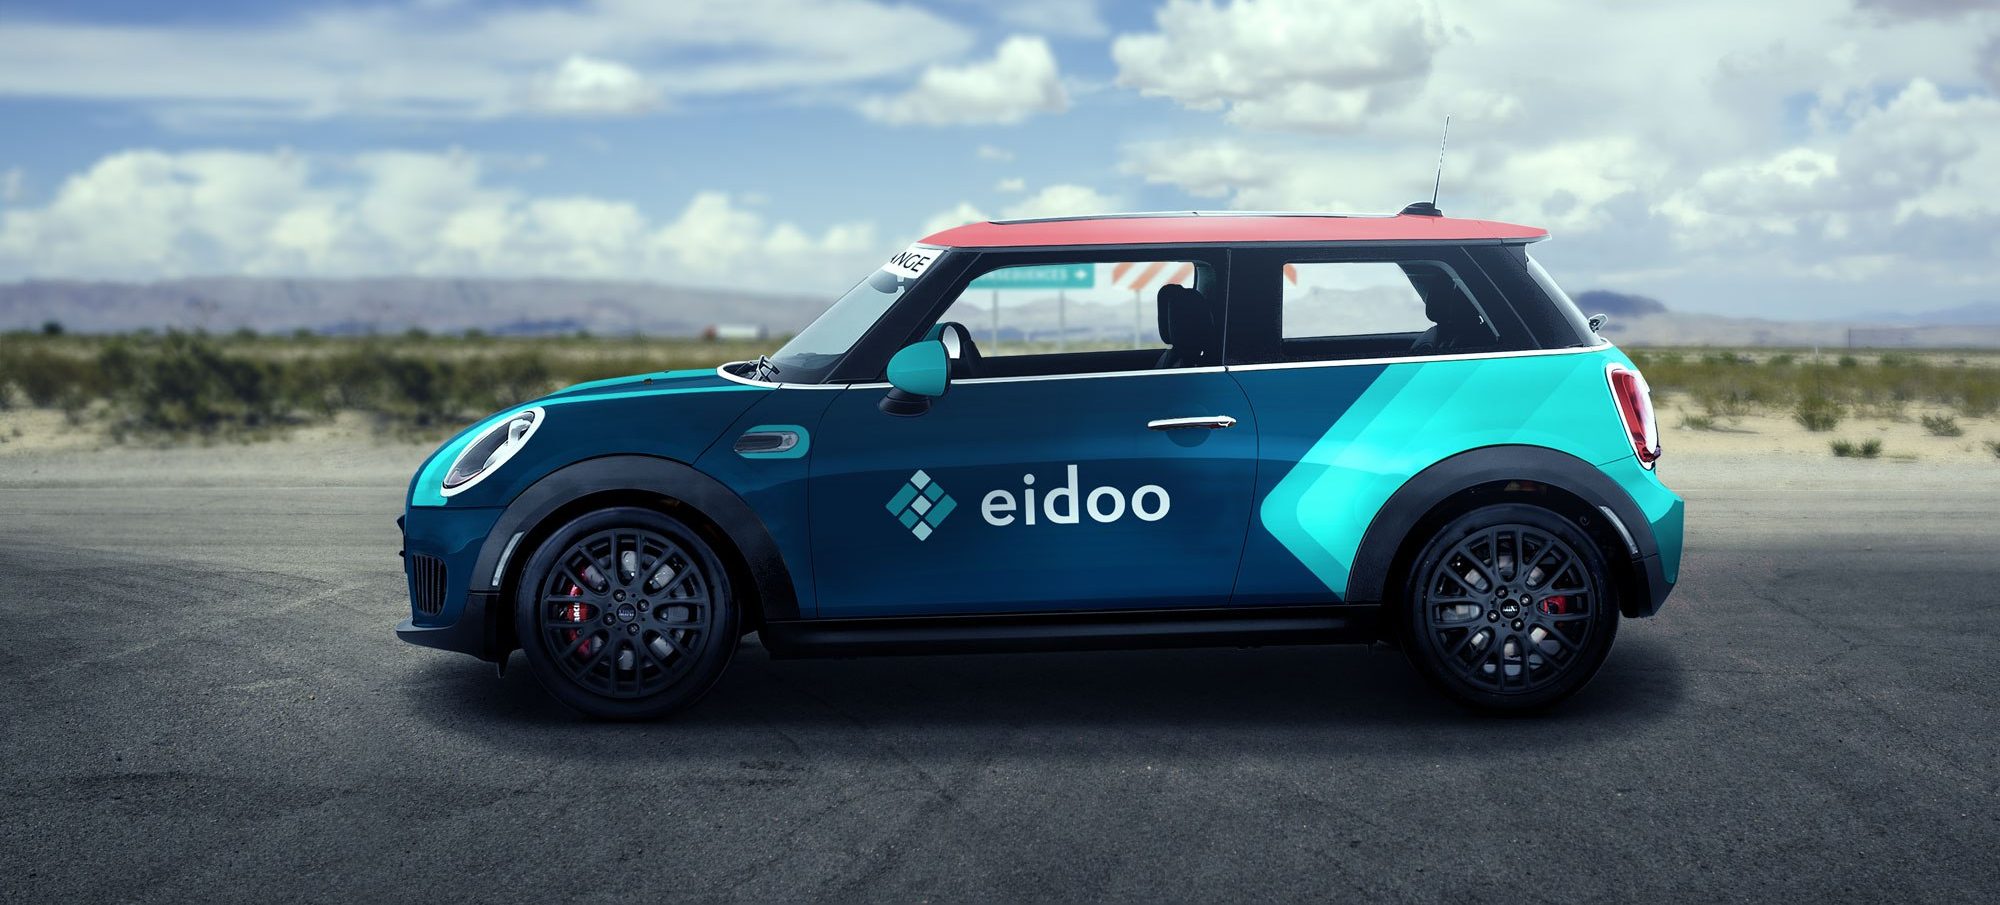 #SpeedNeedsDirection: Eidoo to sponsor the Mini Challenge